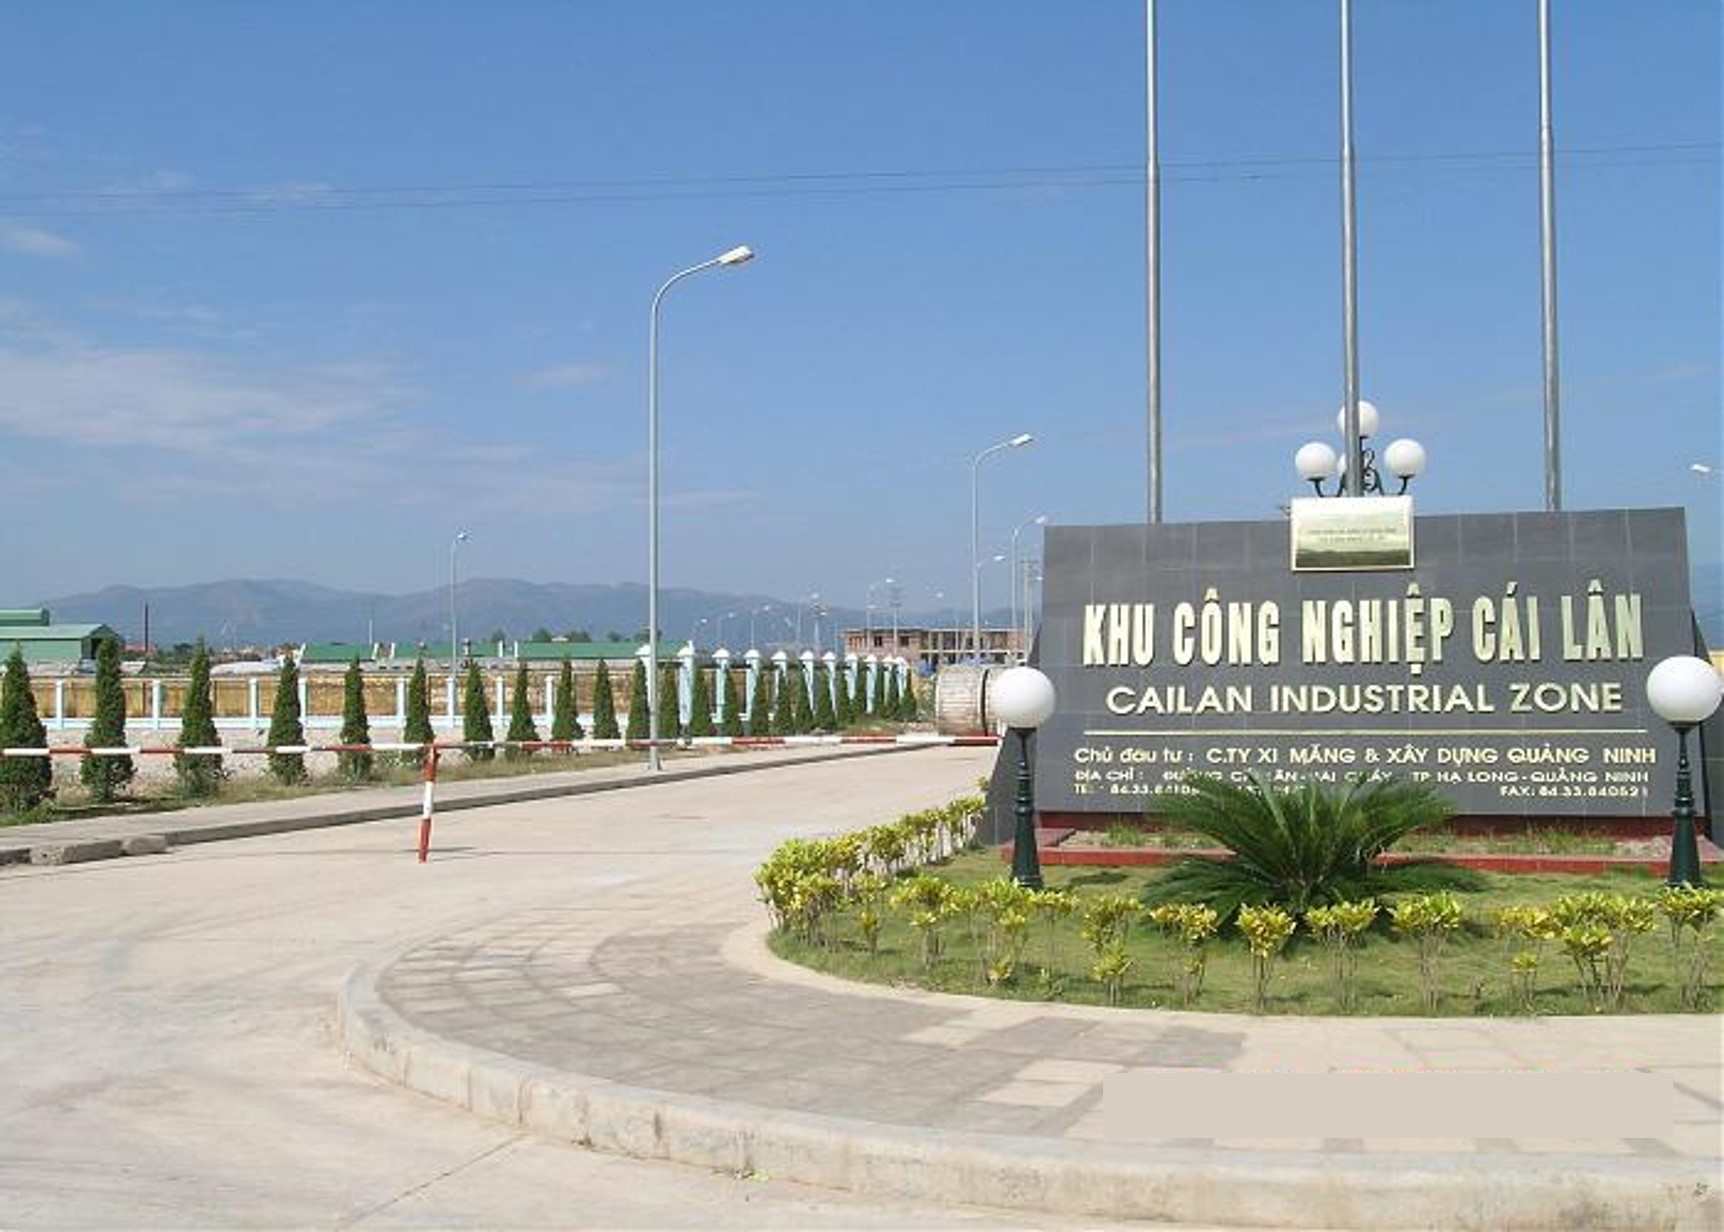 Cai Lan Industrial Park